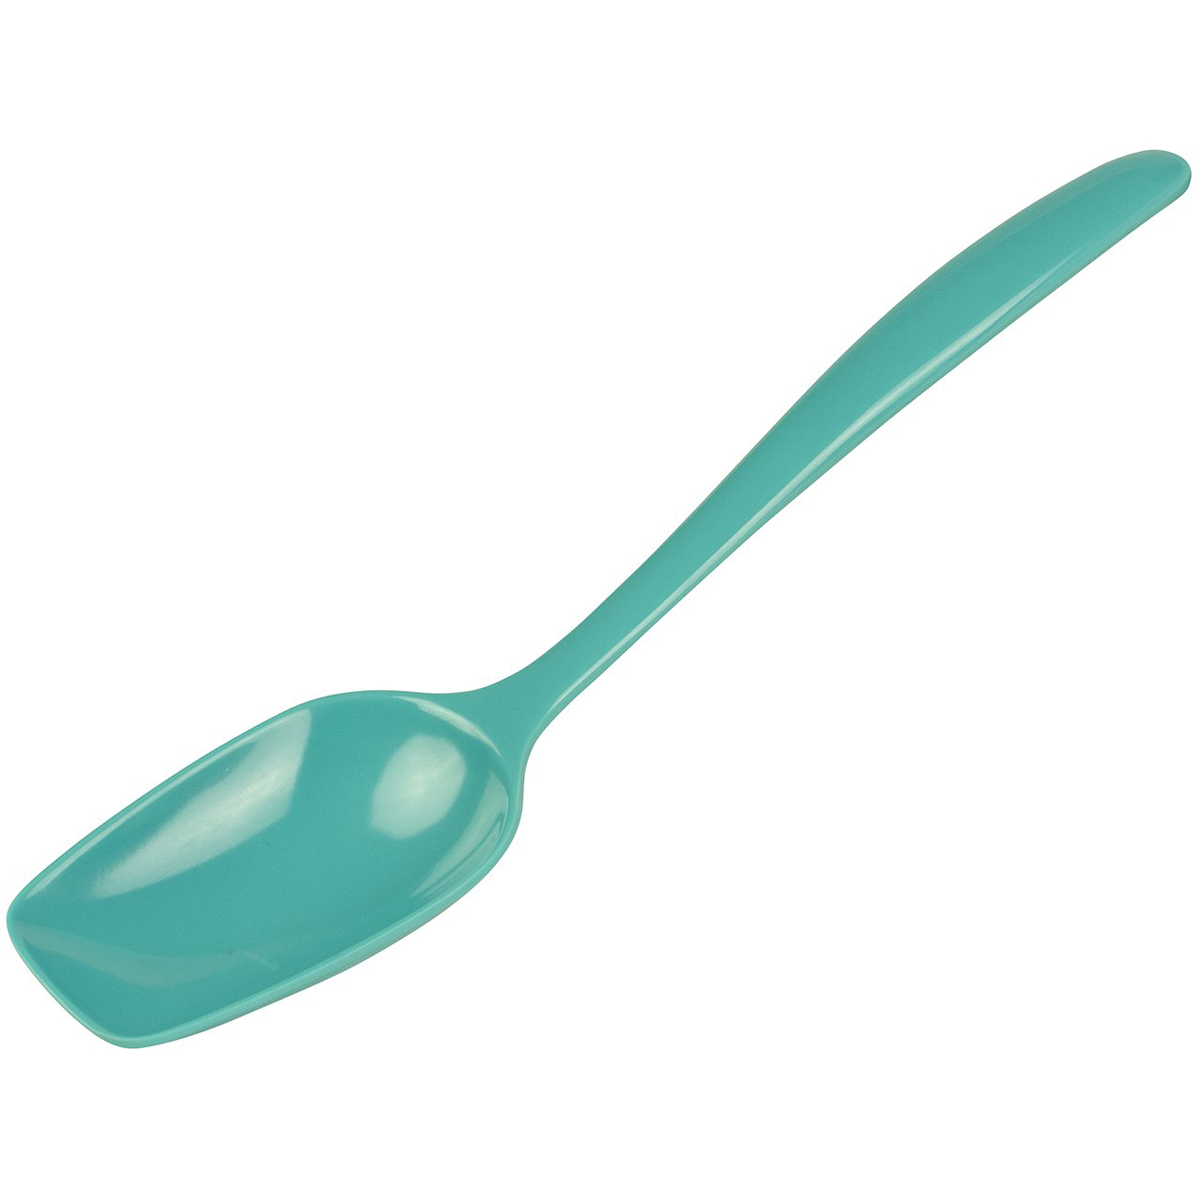 Gourmac G518TU 10" Turquoise Melamine Serving Spoon 